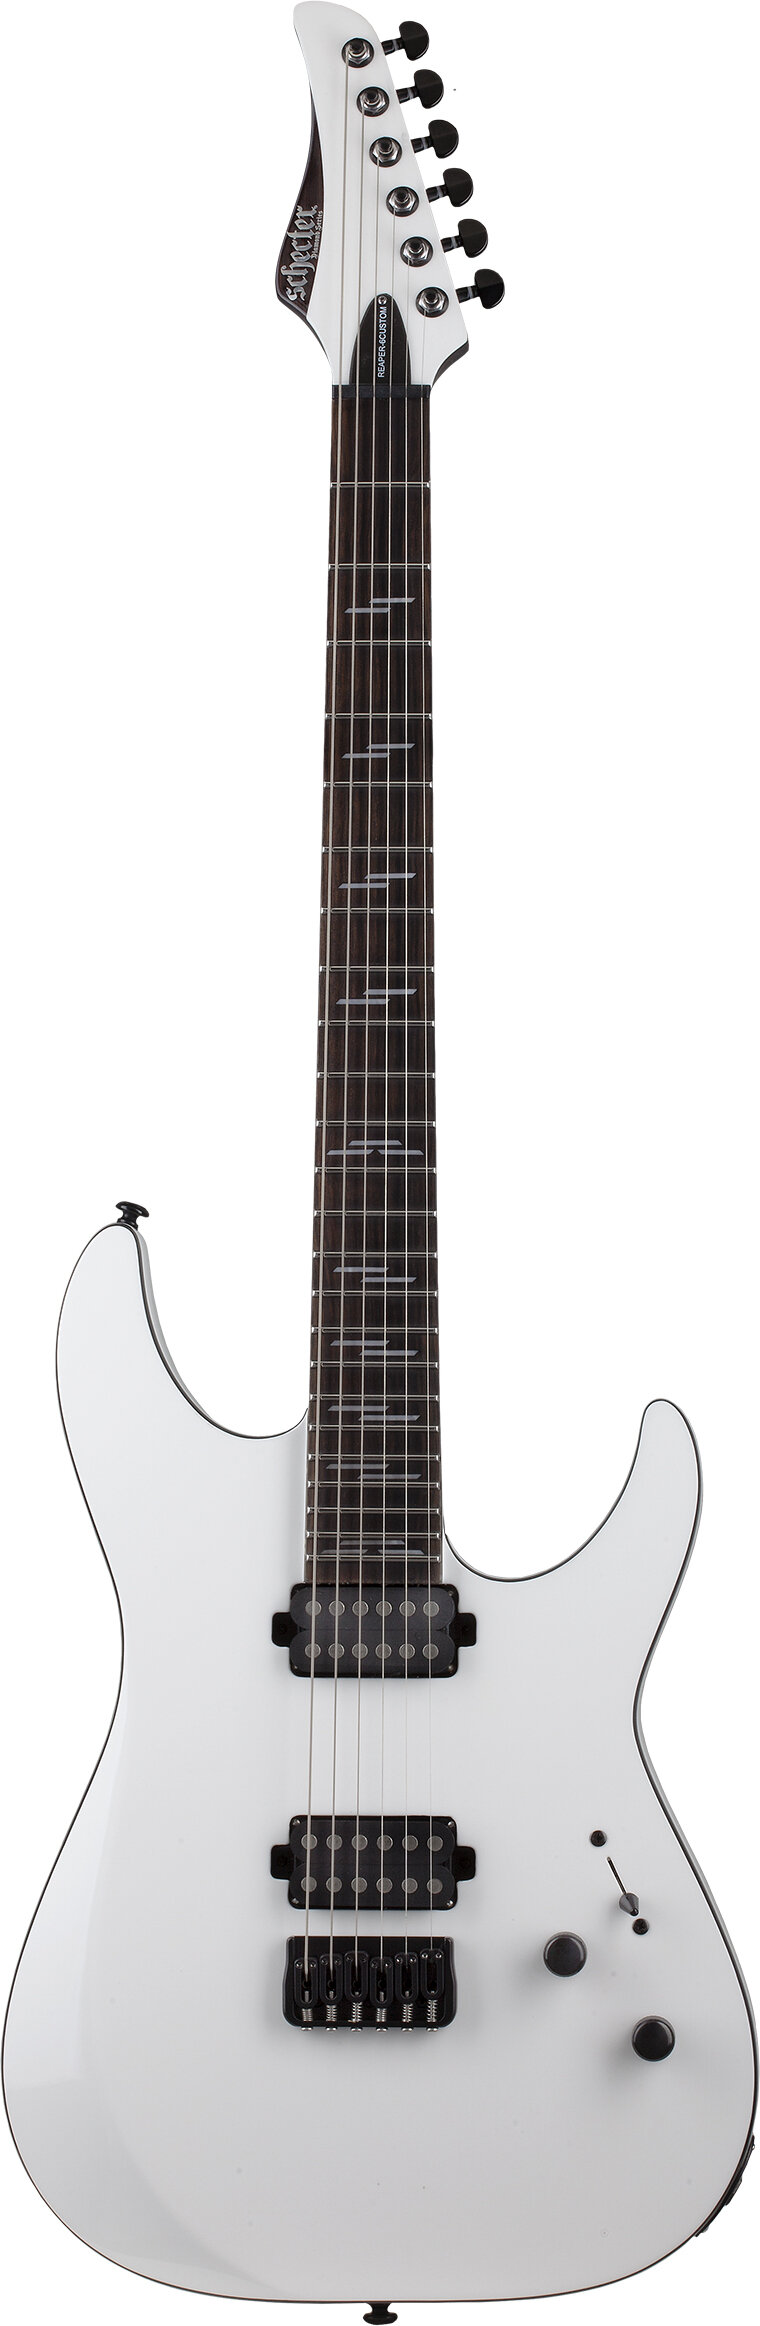 Schecter Reaper 6 Custom Electric Guitar Gloss Wht -  2178